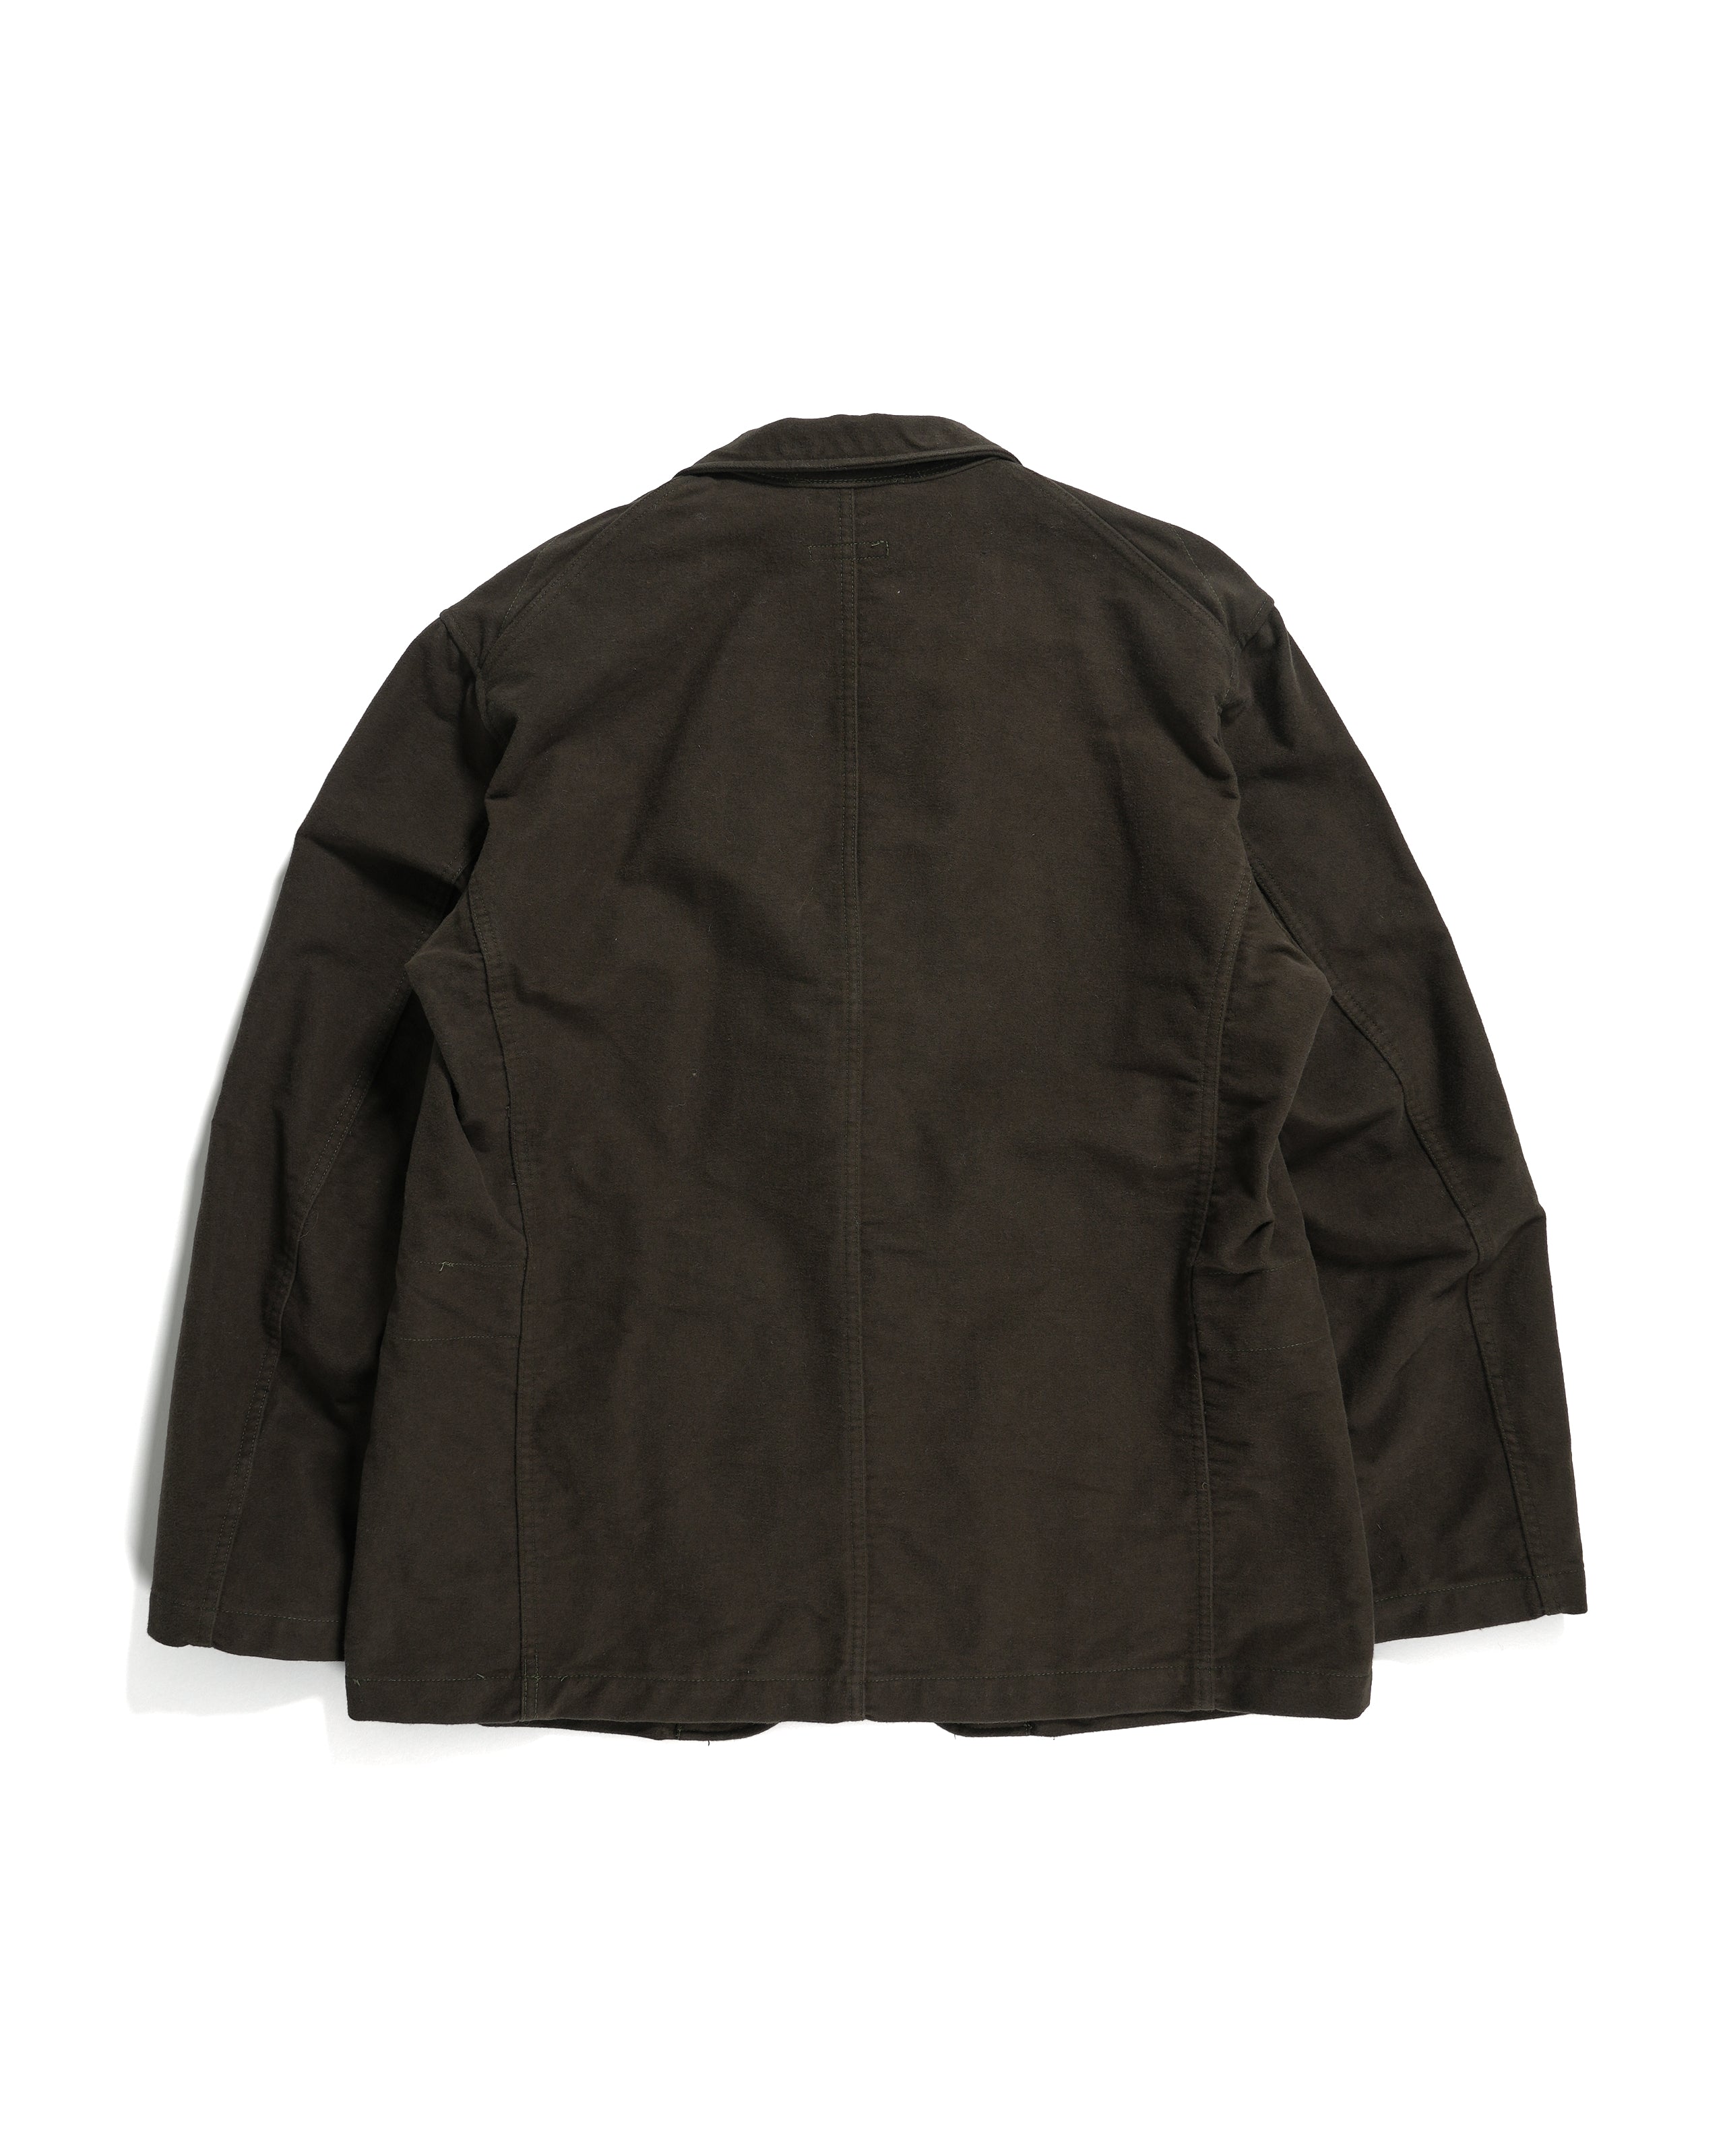 Engineered Garments Bedford Jacket - Olive Cotton Moleskin